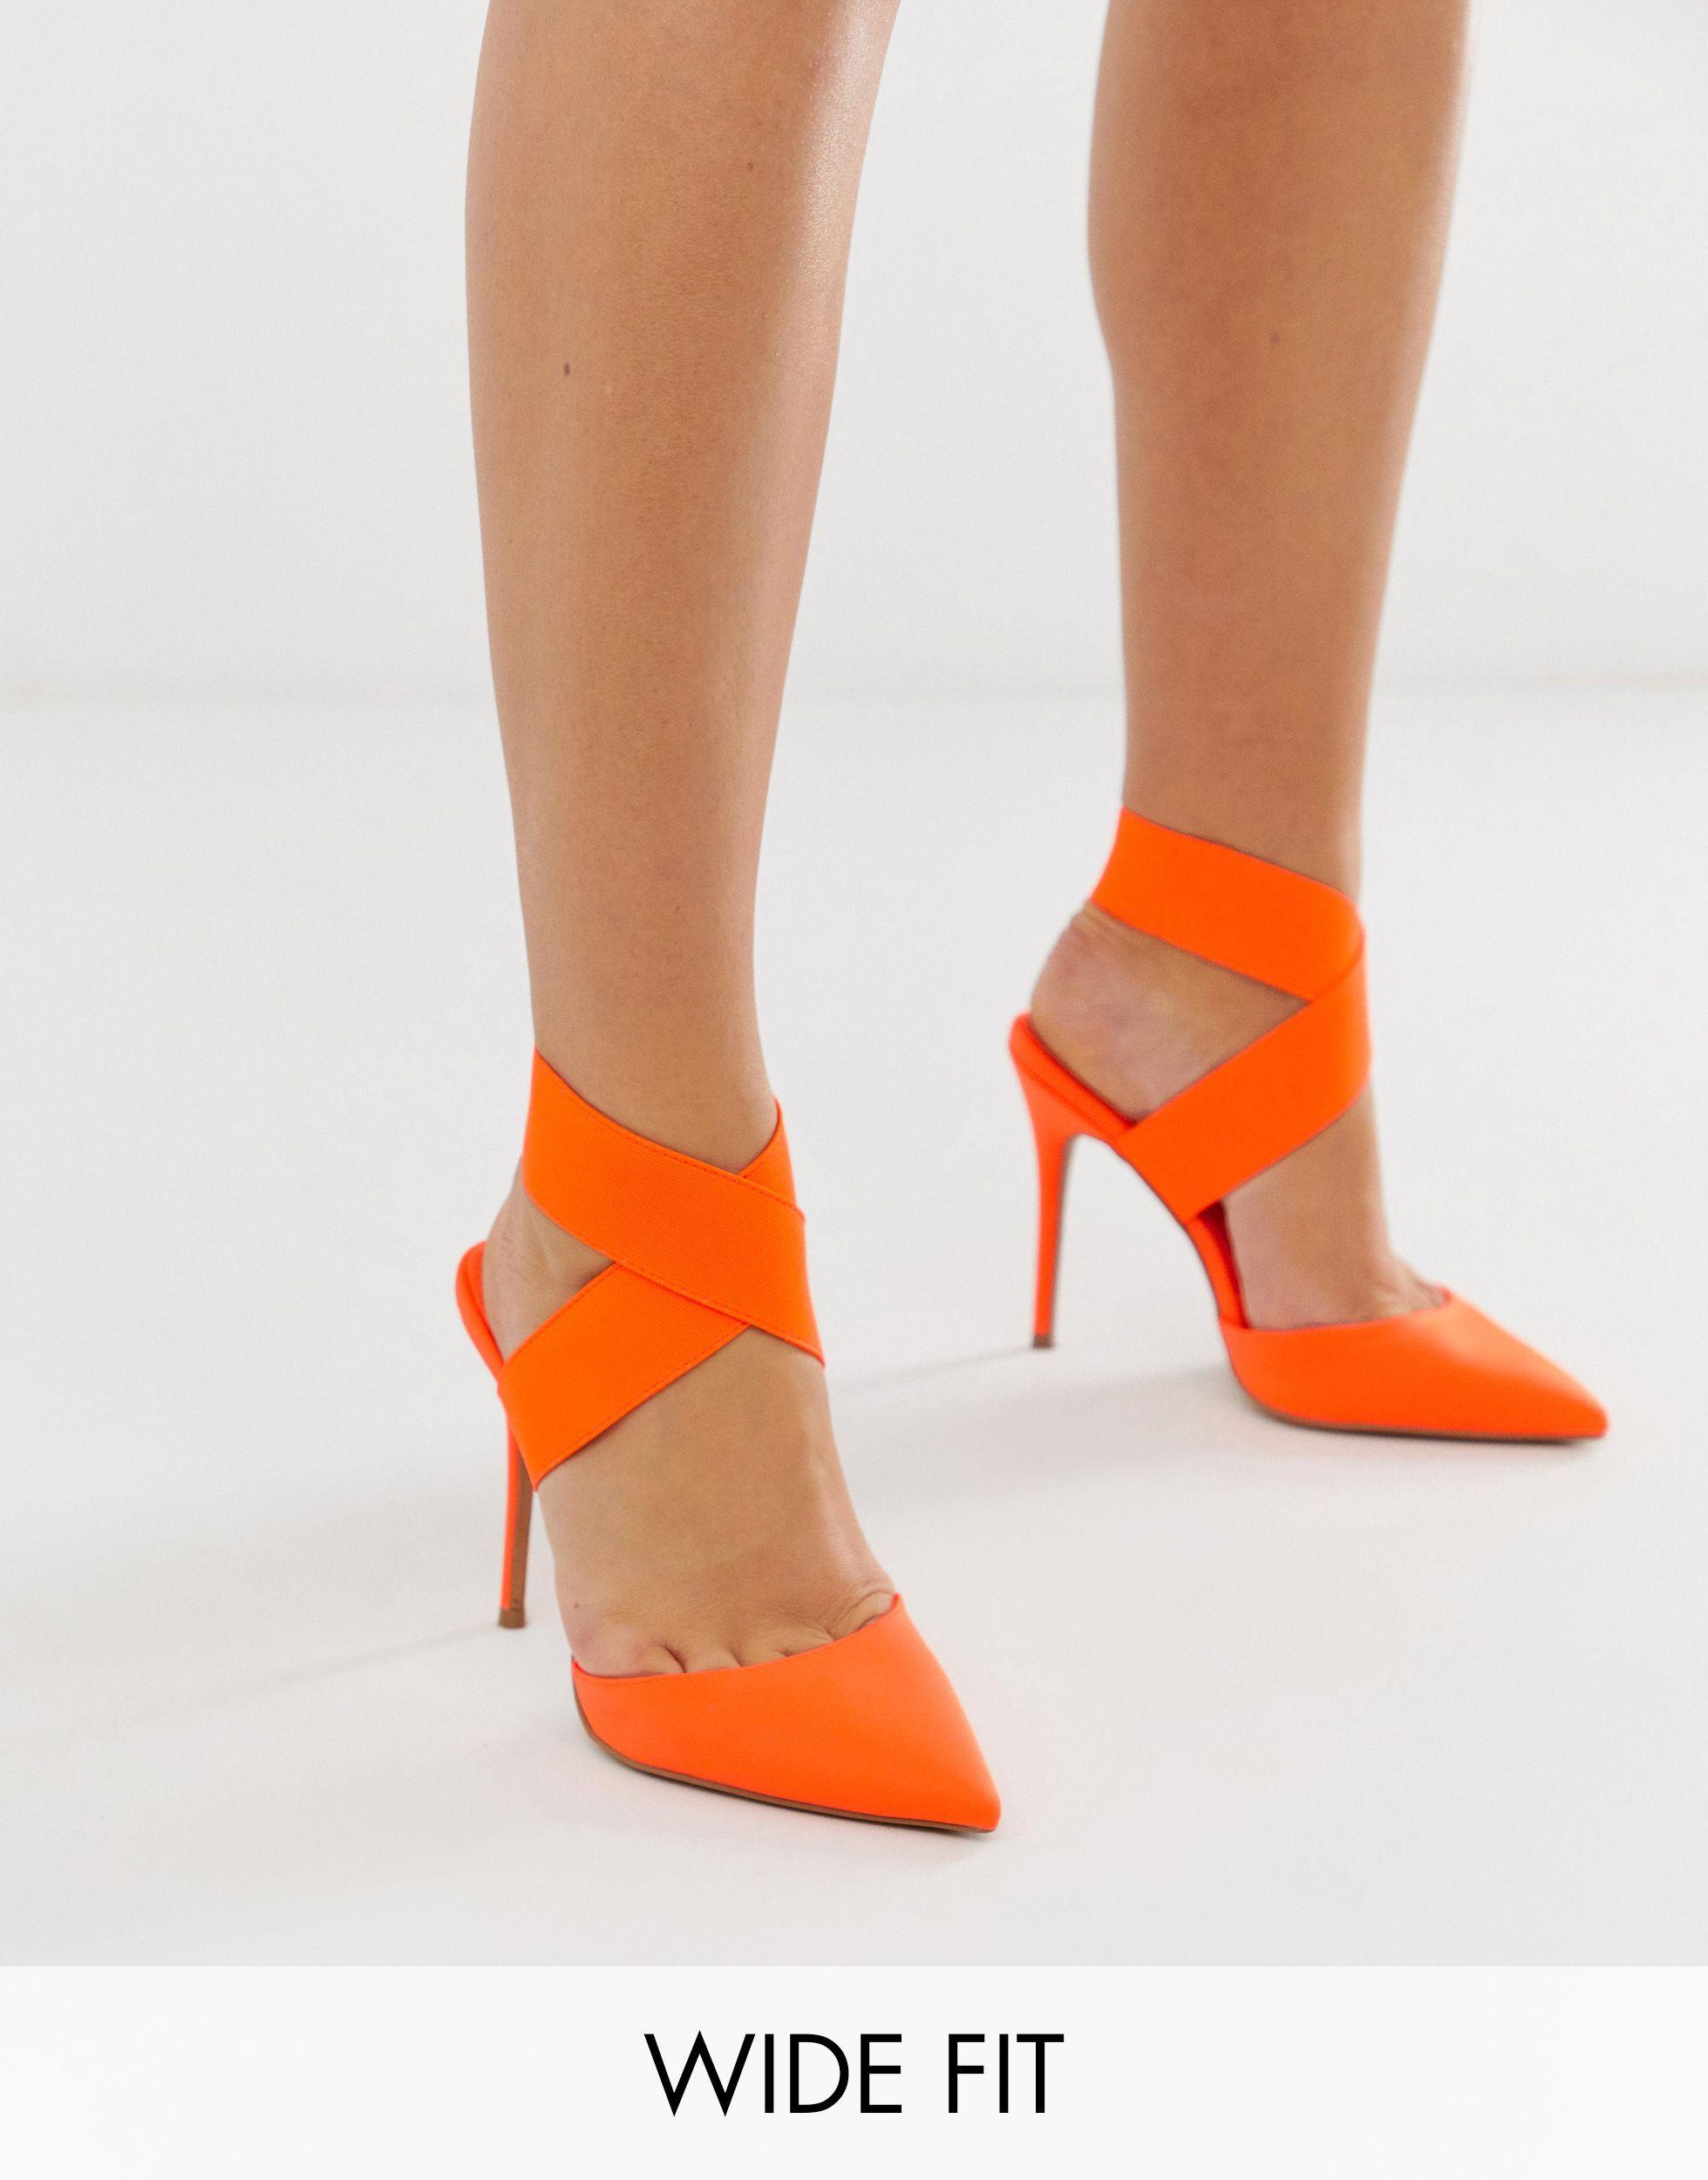 DİVOLYA Virgina Orange Satin Front Buckle Daily Use Heeled Shoes - Trendyol